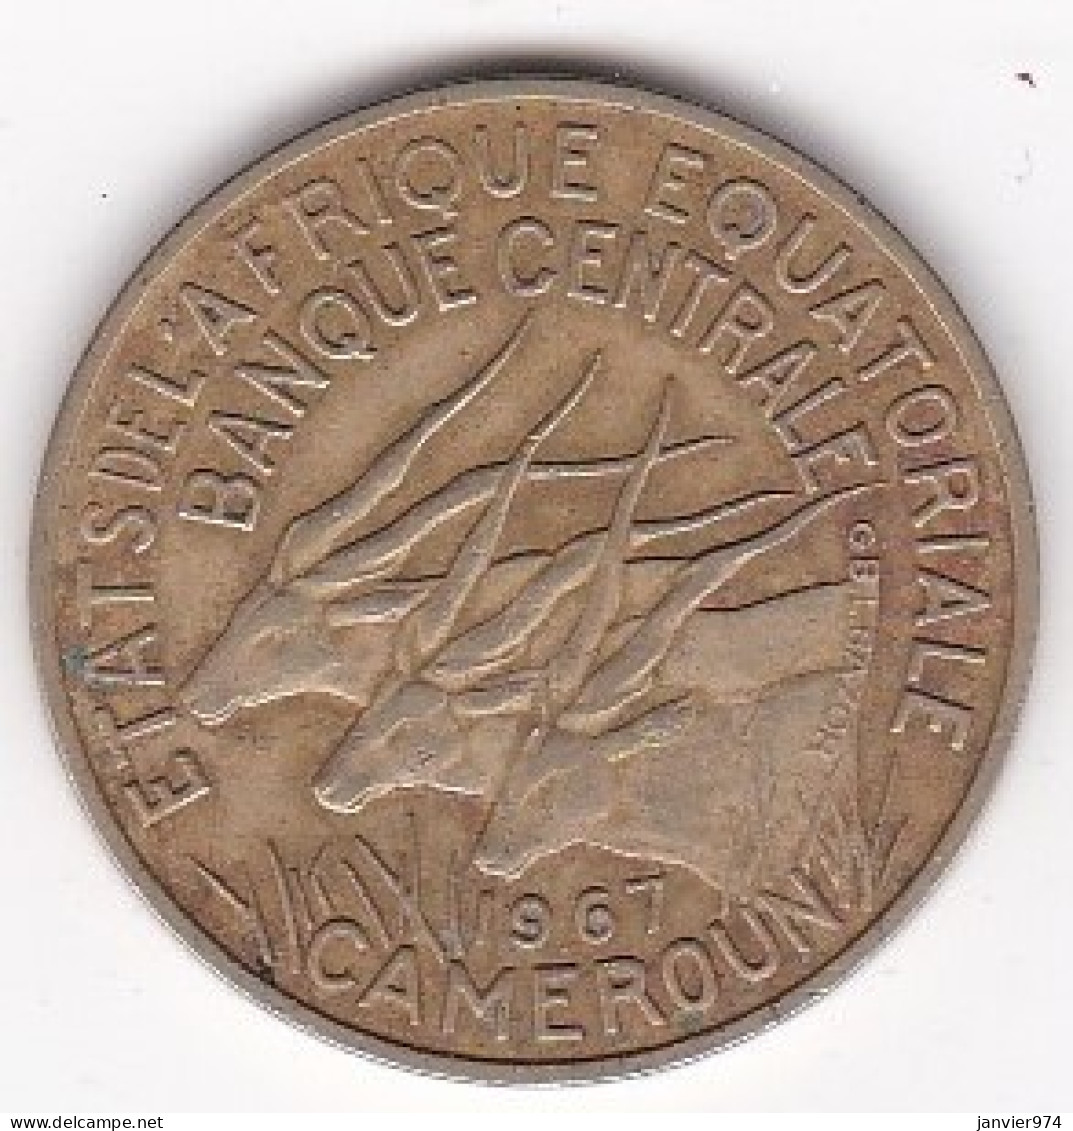 Cameroun, Afrique Equatoriale Française, 10 FRANCS 1967, Bronze Aluminium. KM# 2a - Cameroun